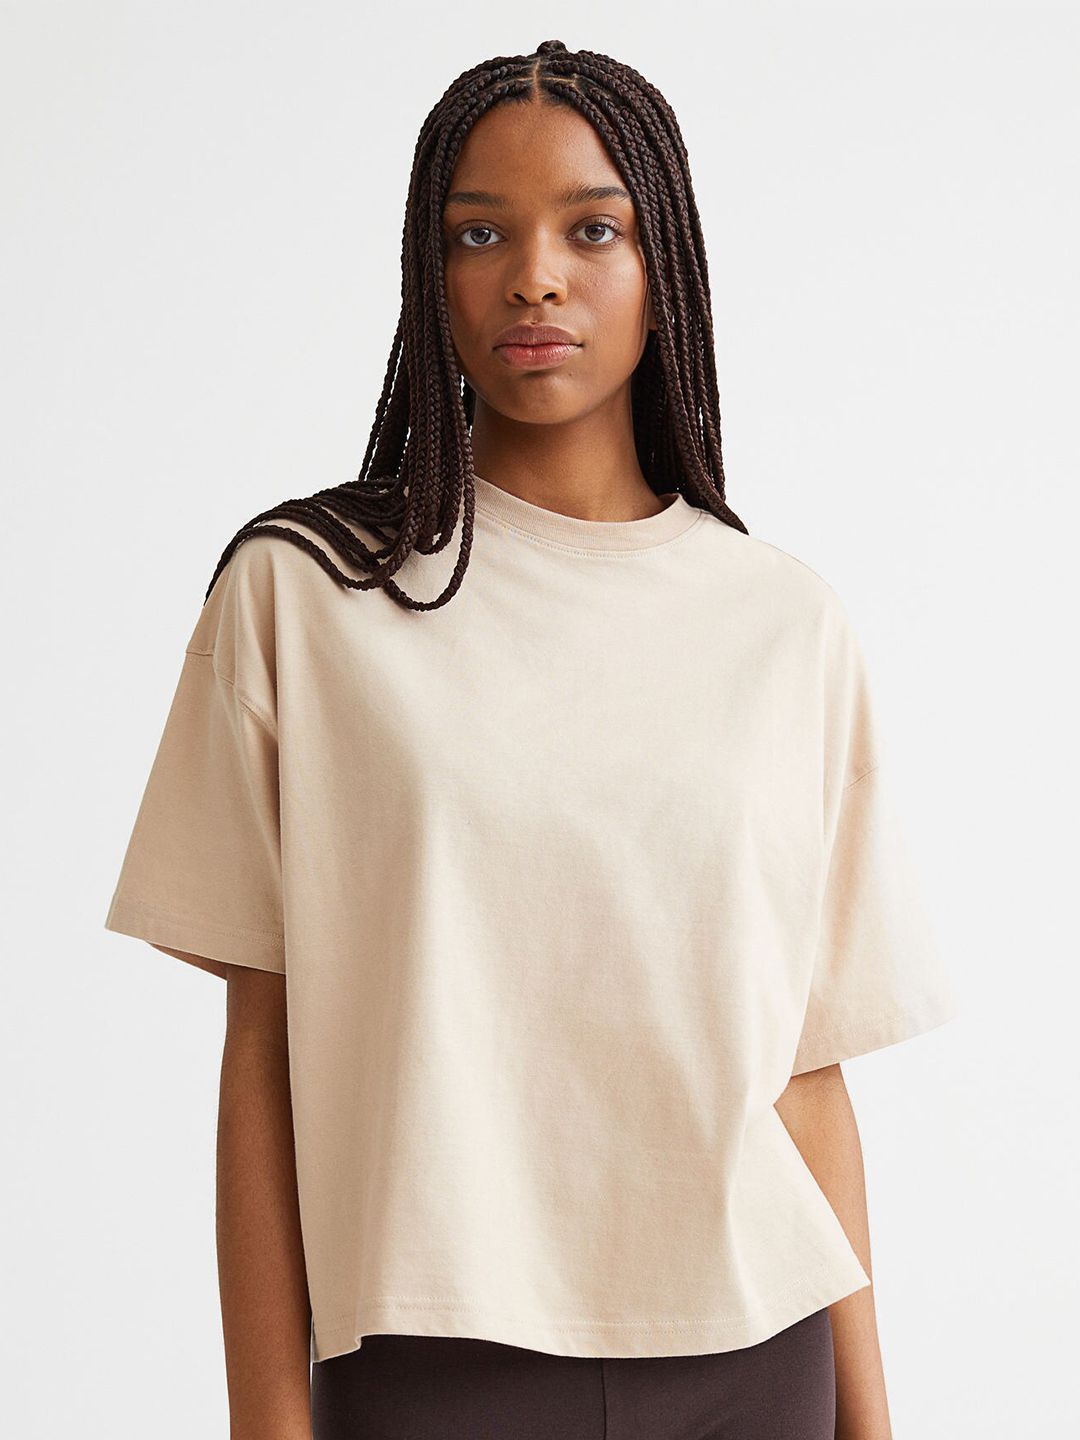 H&M Women Beige Cotton Boxy T-shirt Price in India